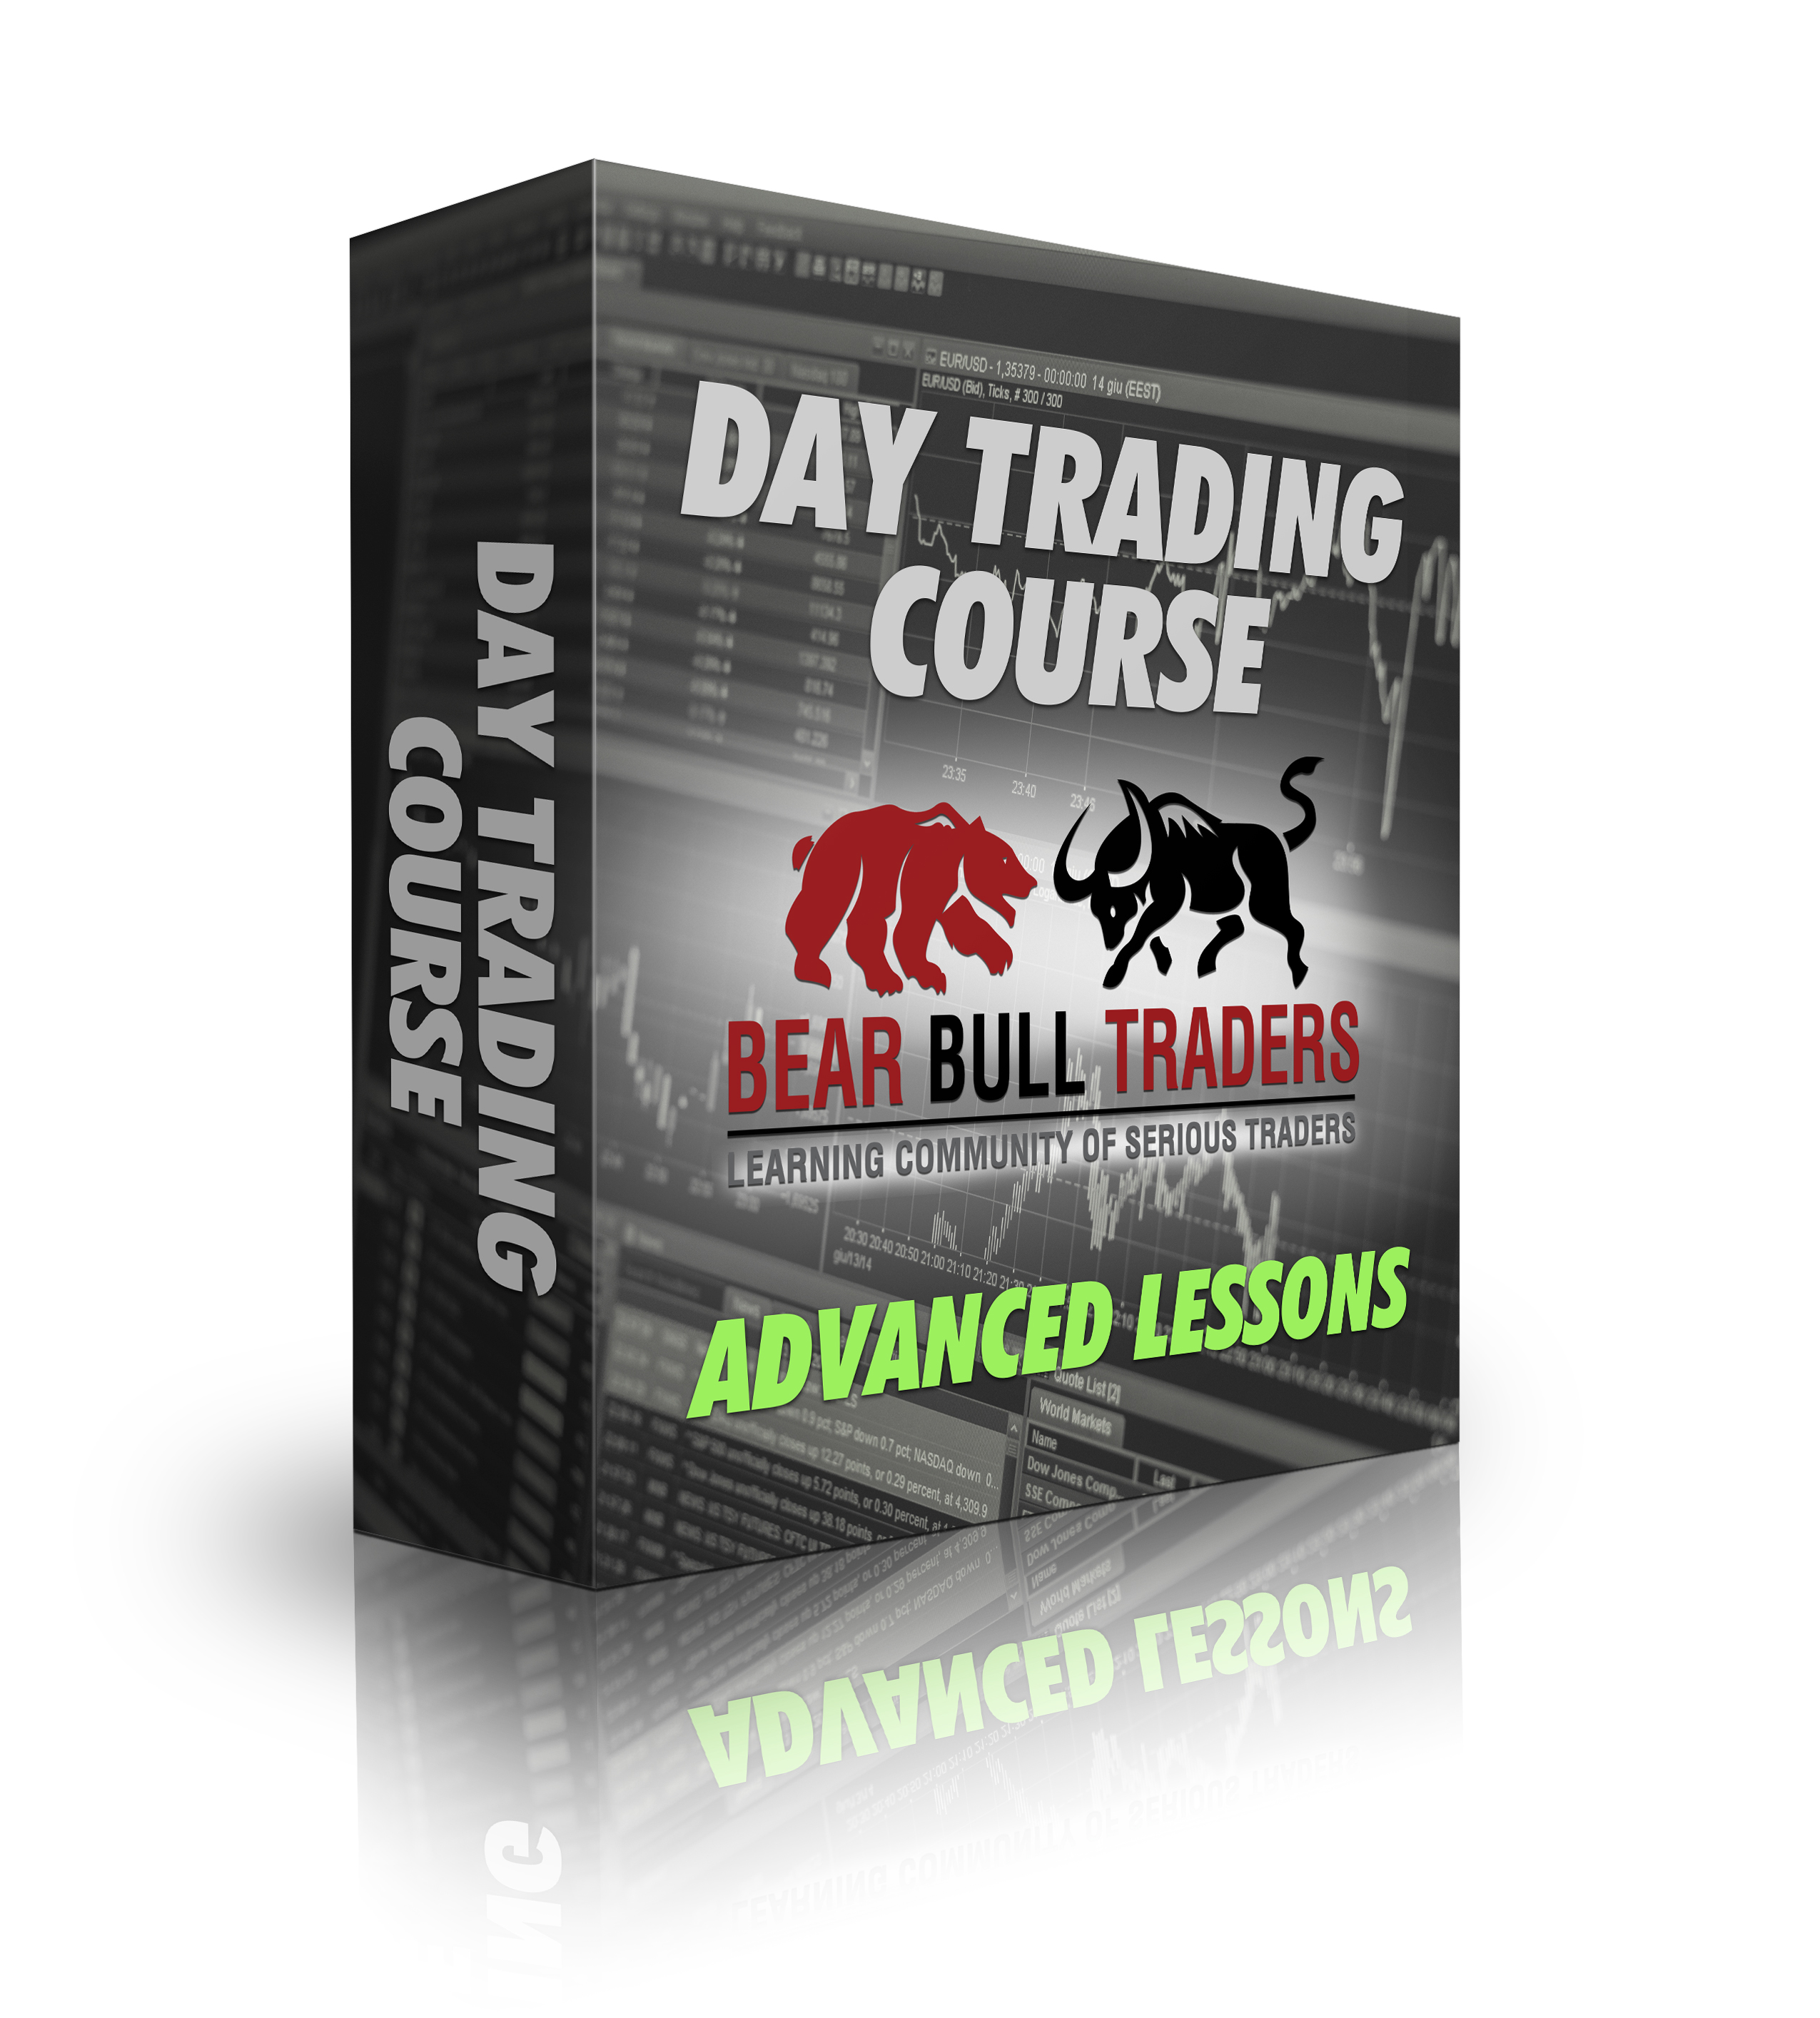 Bear bull traders course free download acrobat pdf free download